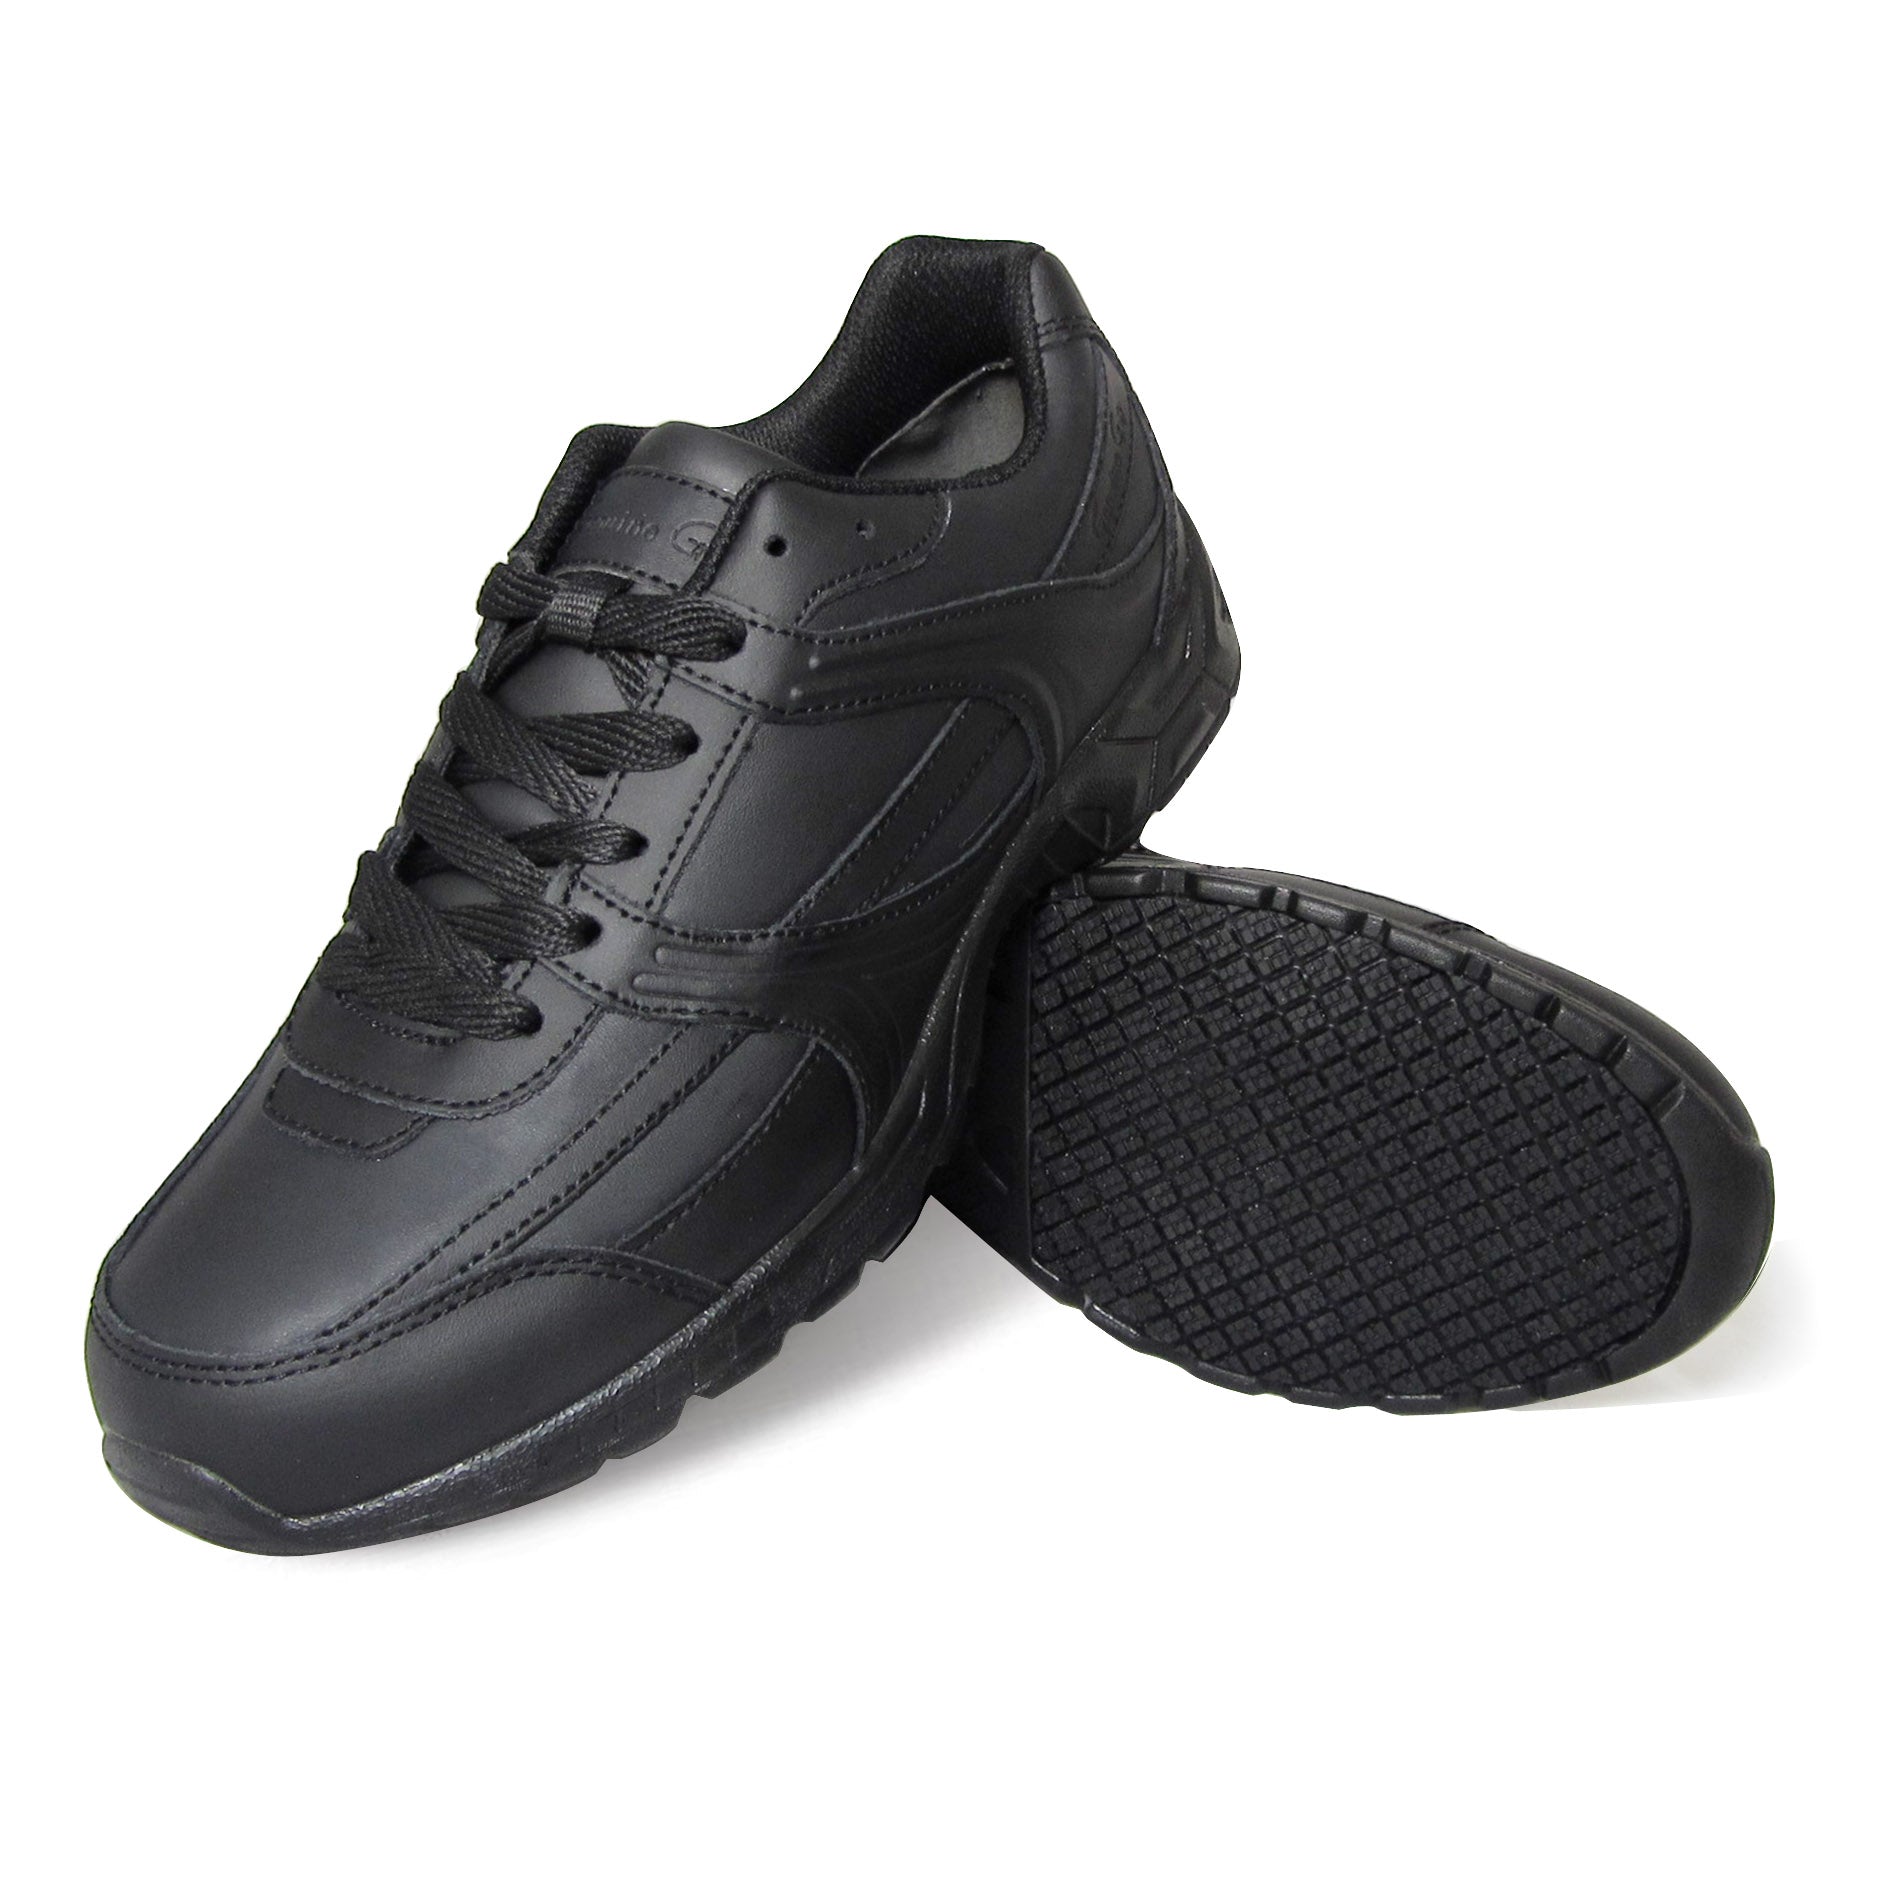 men's athletic work shoes